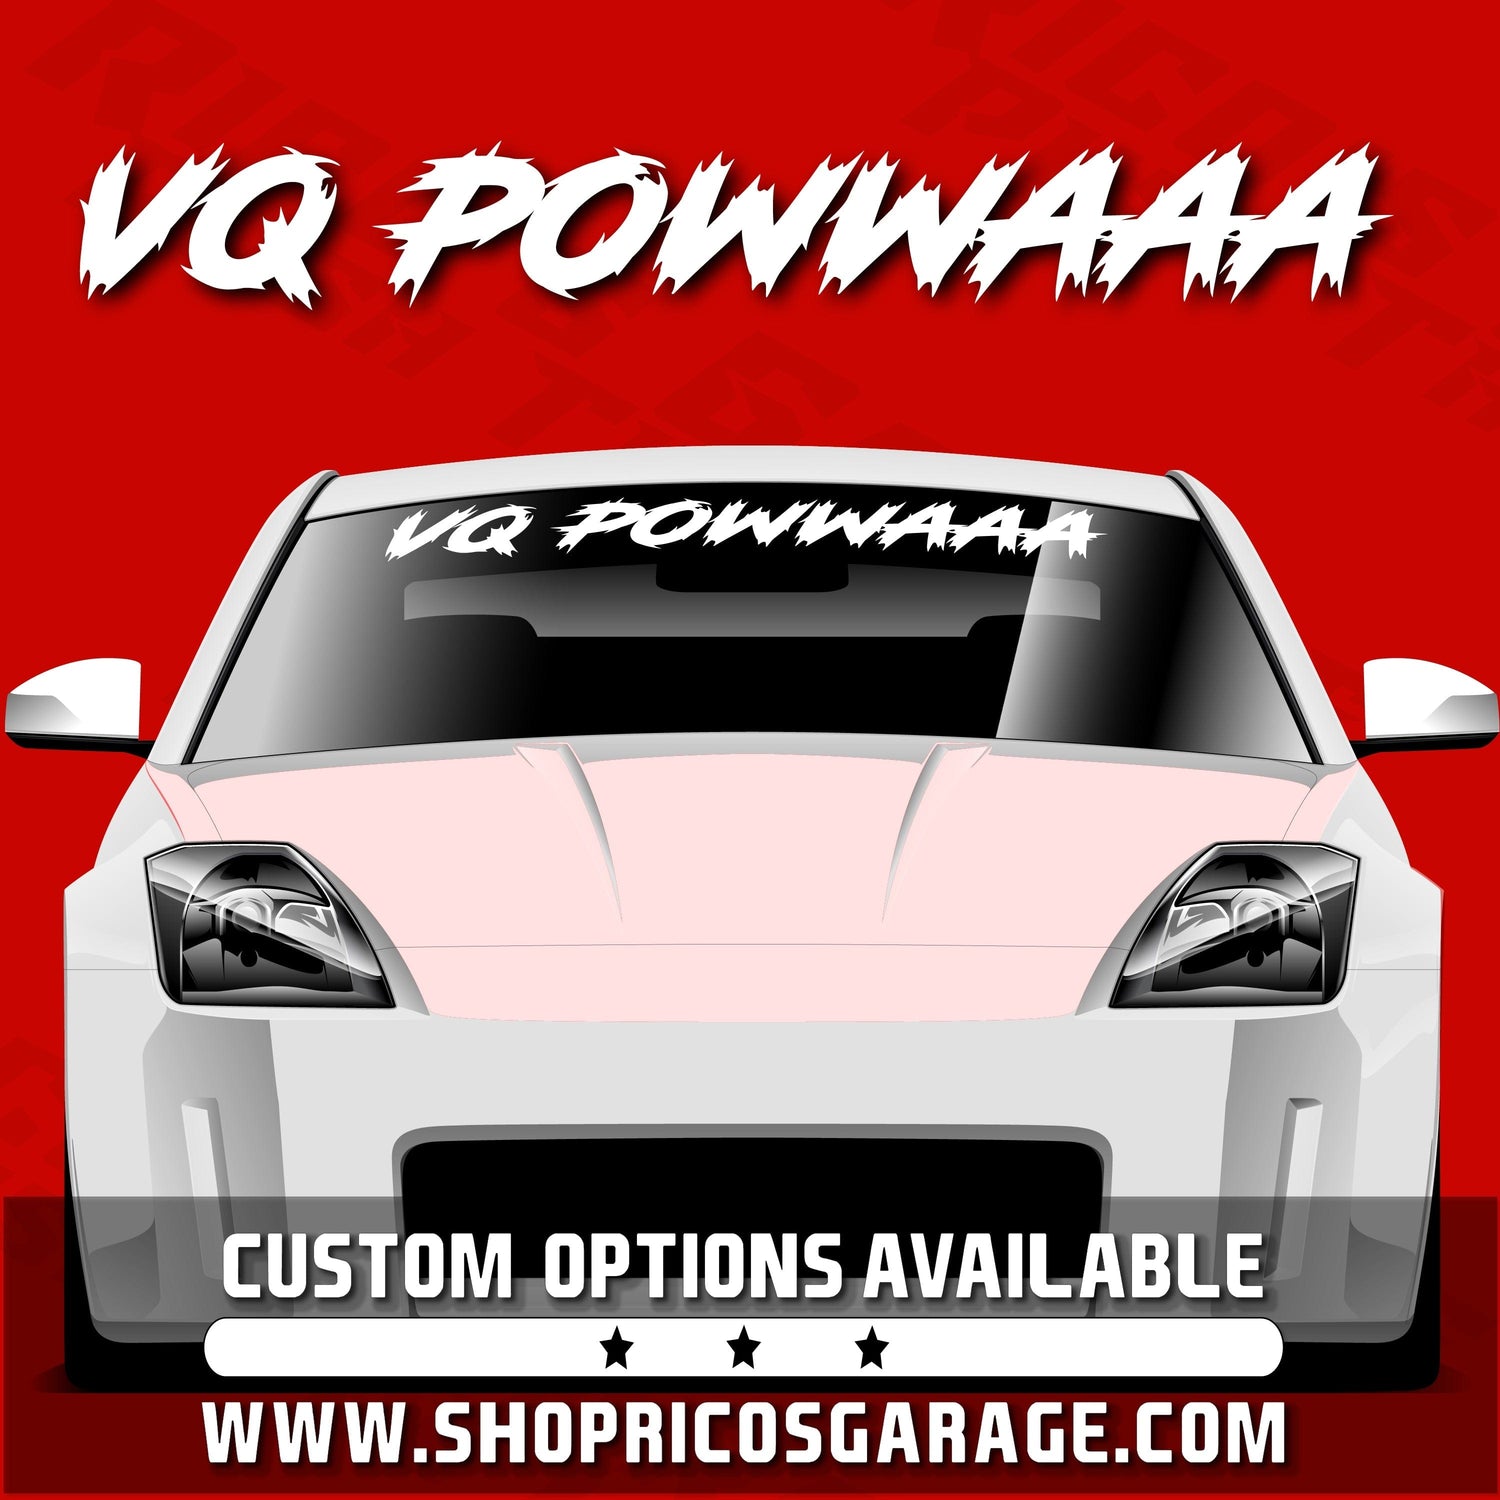 VQ POWWAAA Vinyl Custom Car Windshield Banner - Rico's Garage